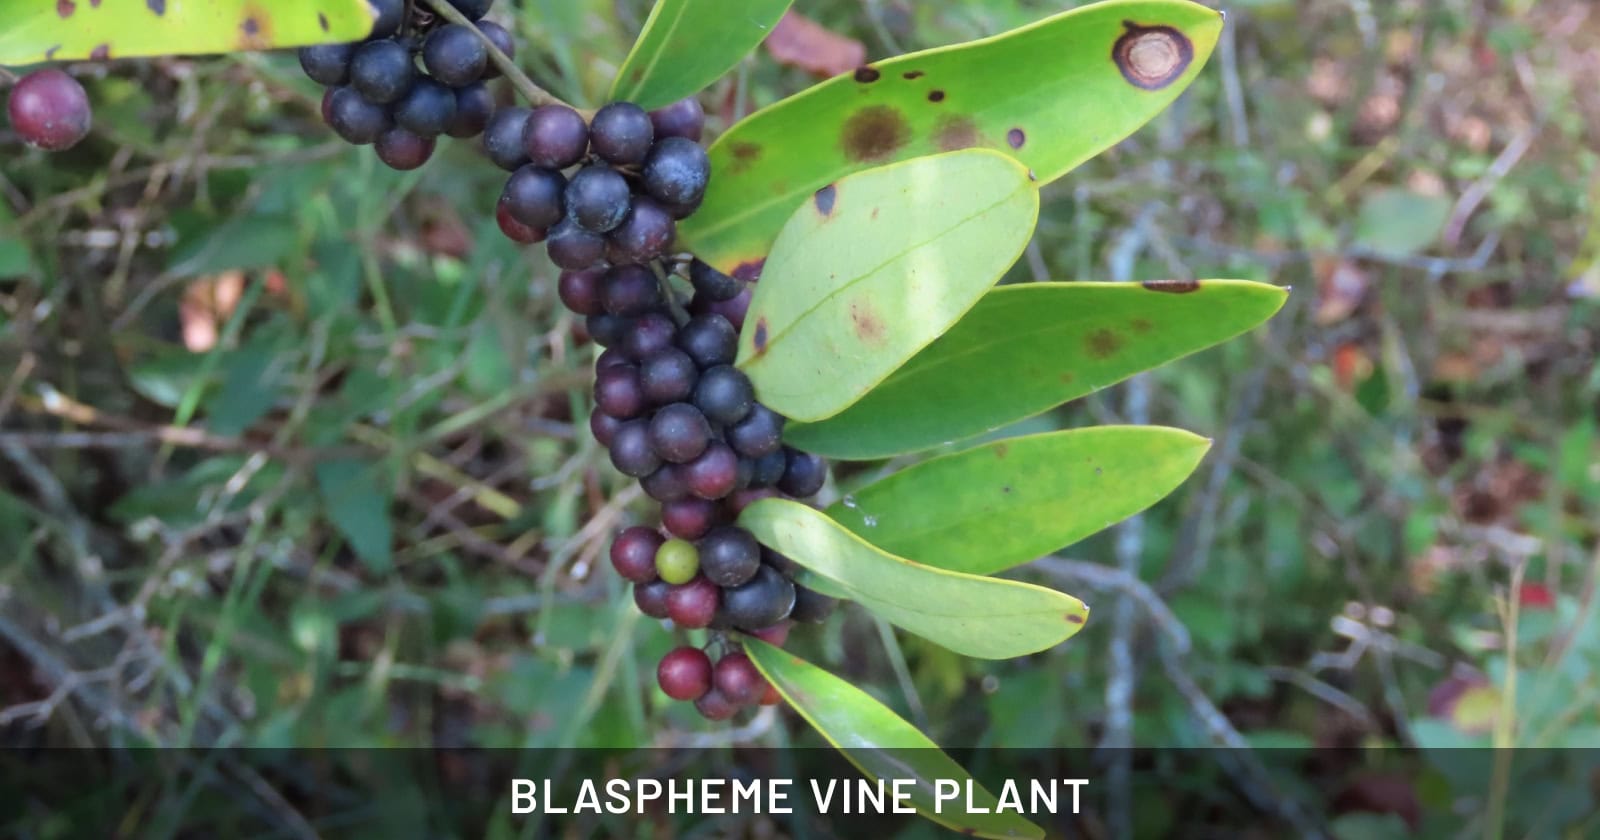 Blaspheme Vine Plant